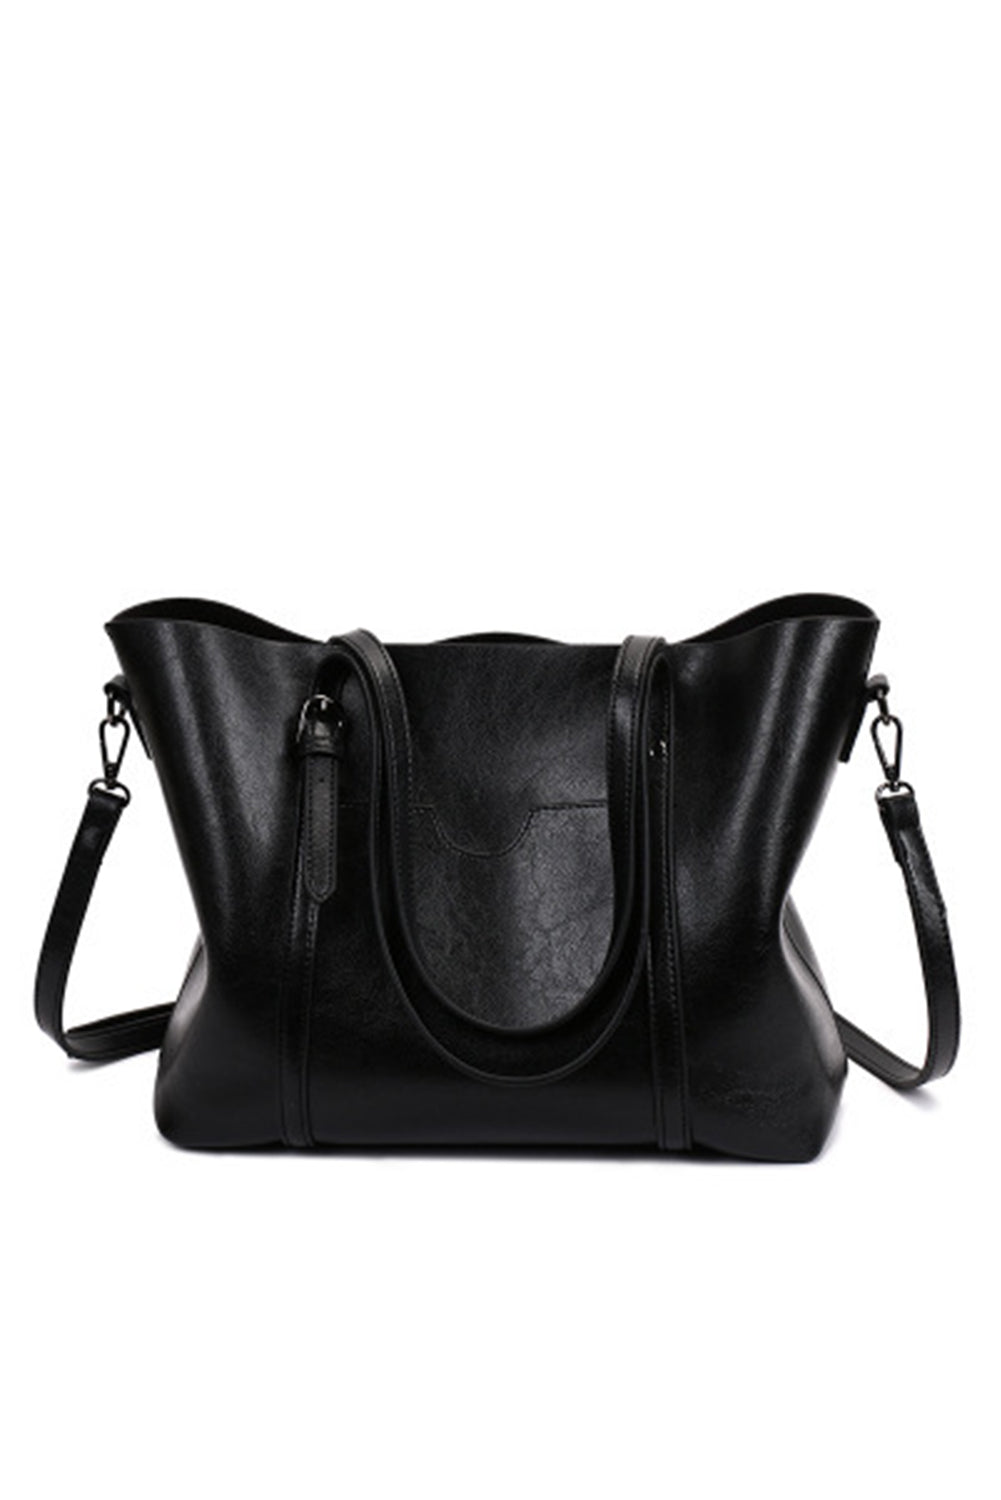 Brown Dual Handle Shoulder Faux Leather Messenger Bag